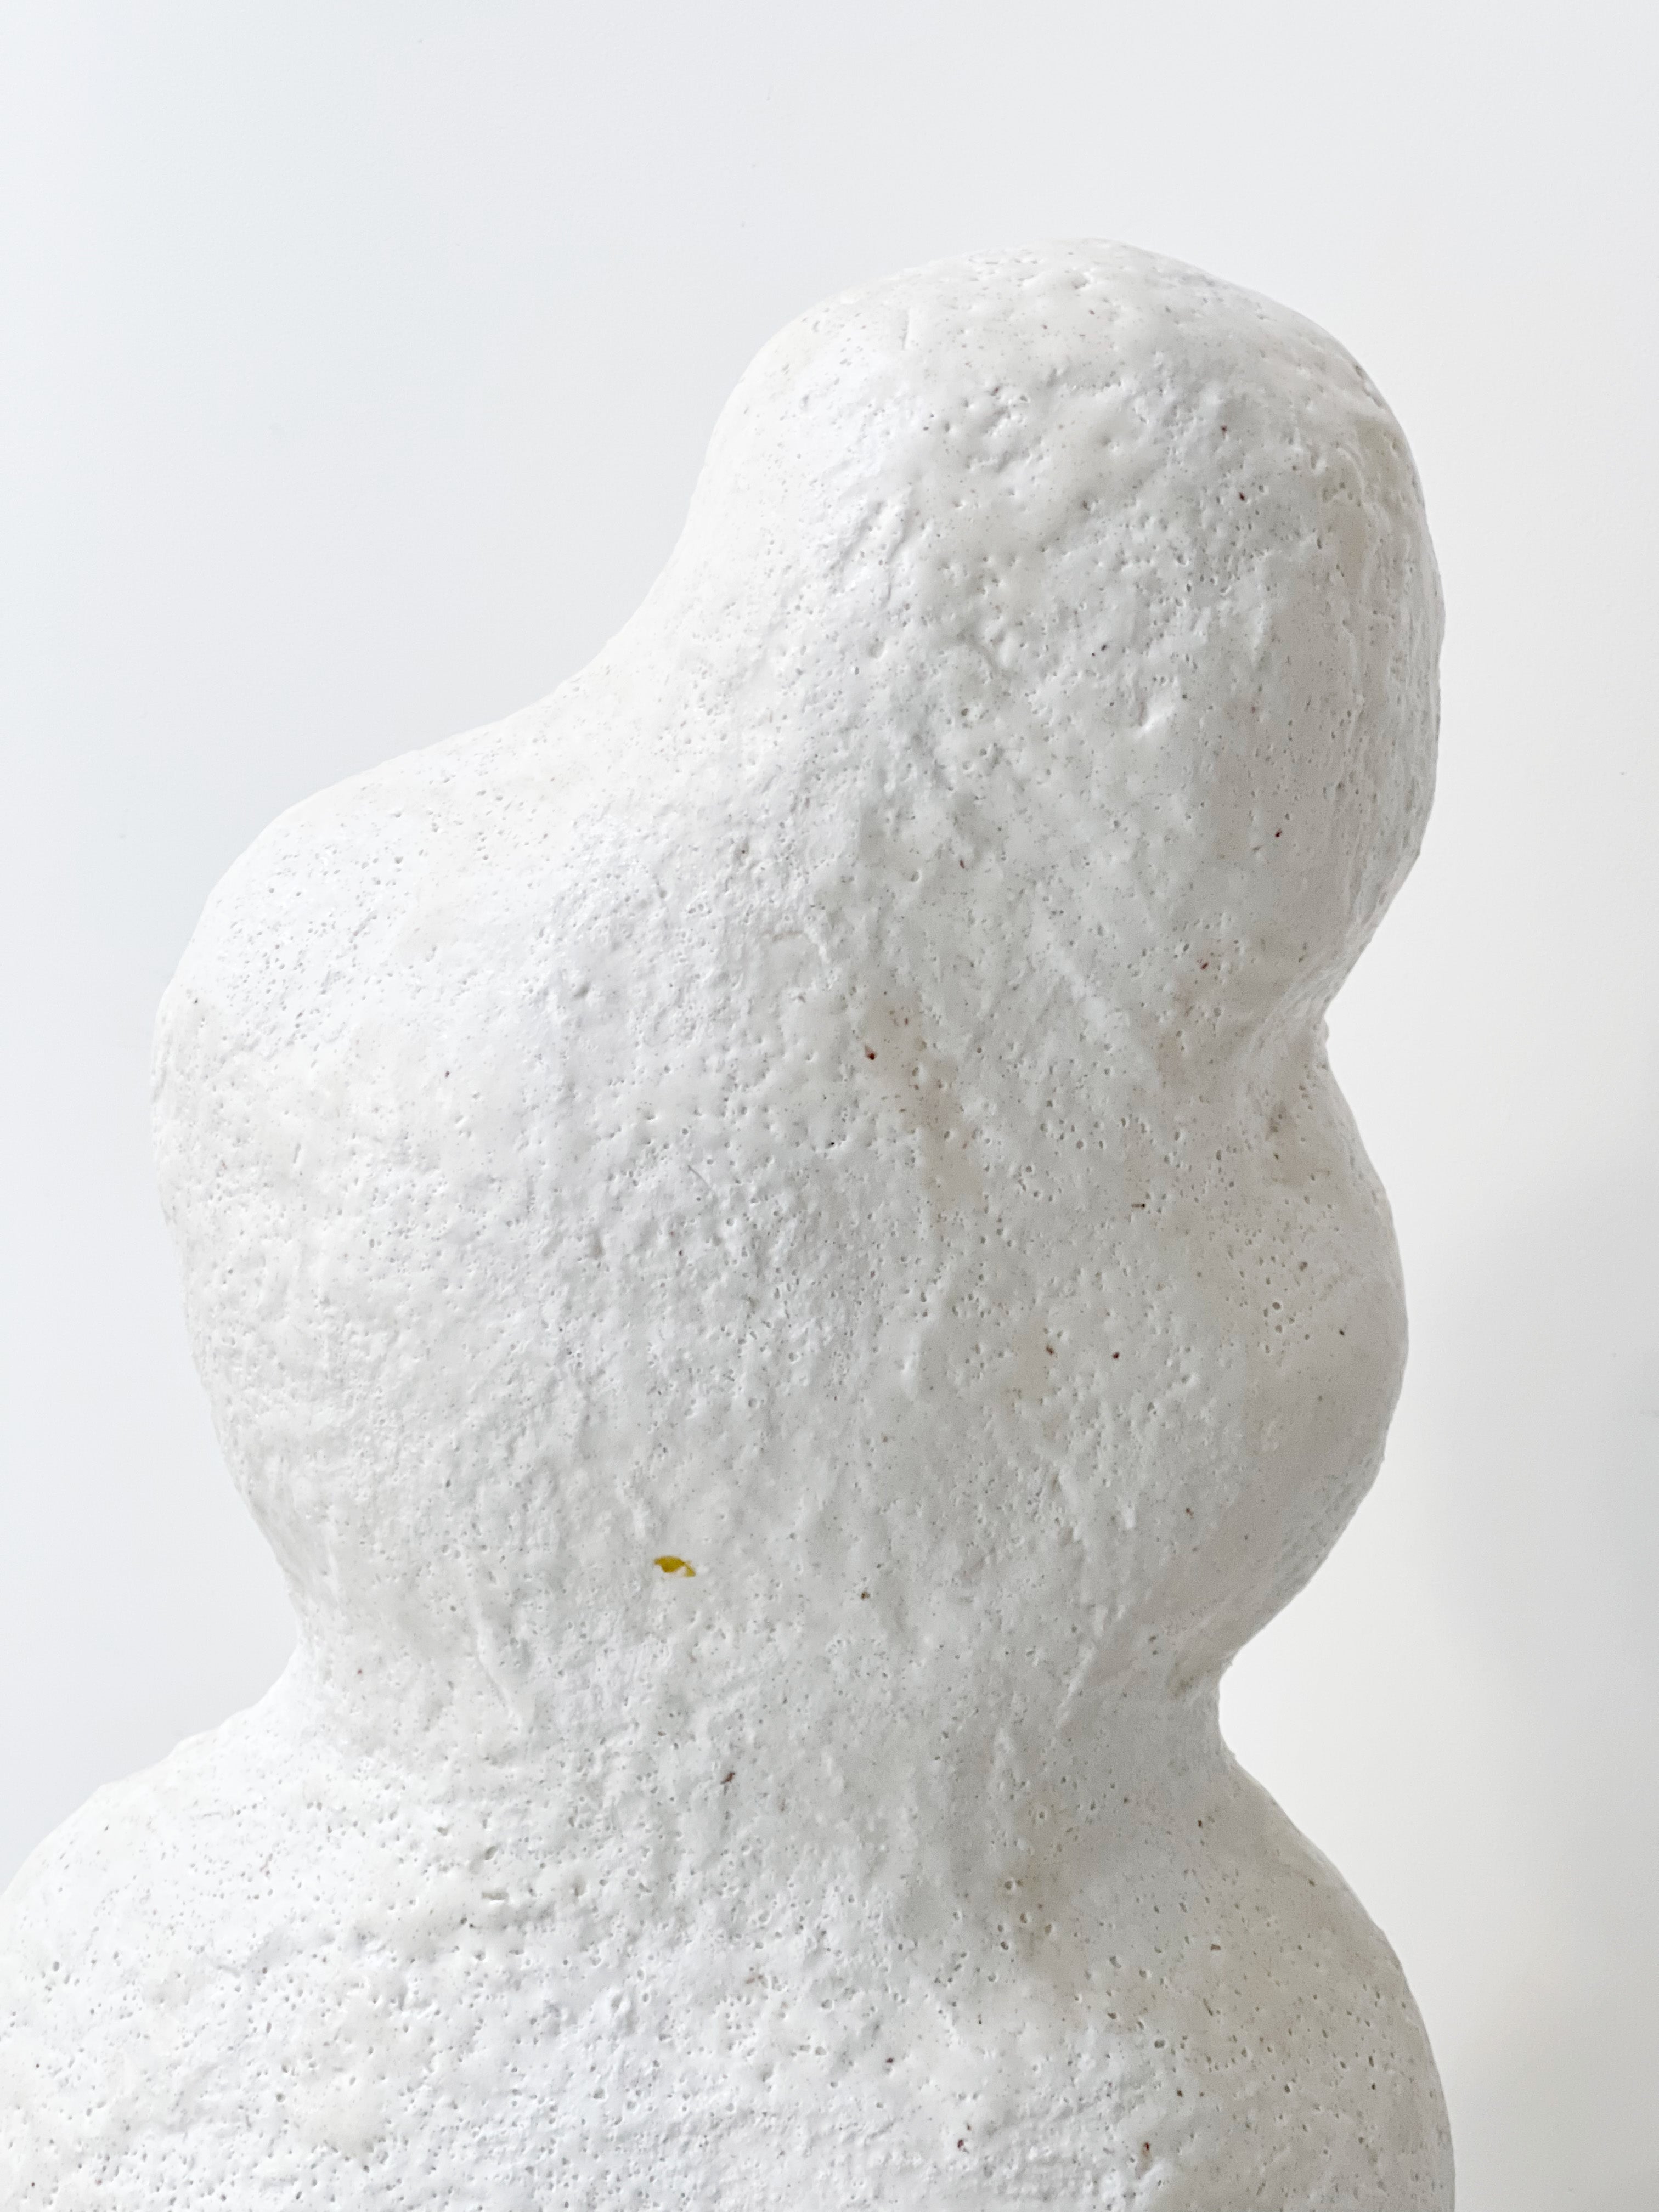 Sculpture: Bubble Object Collection 06